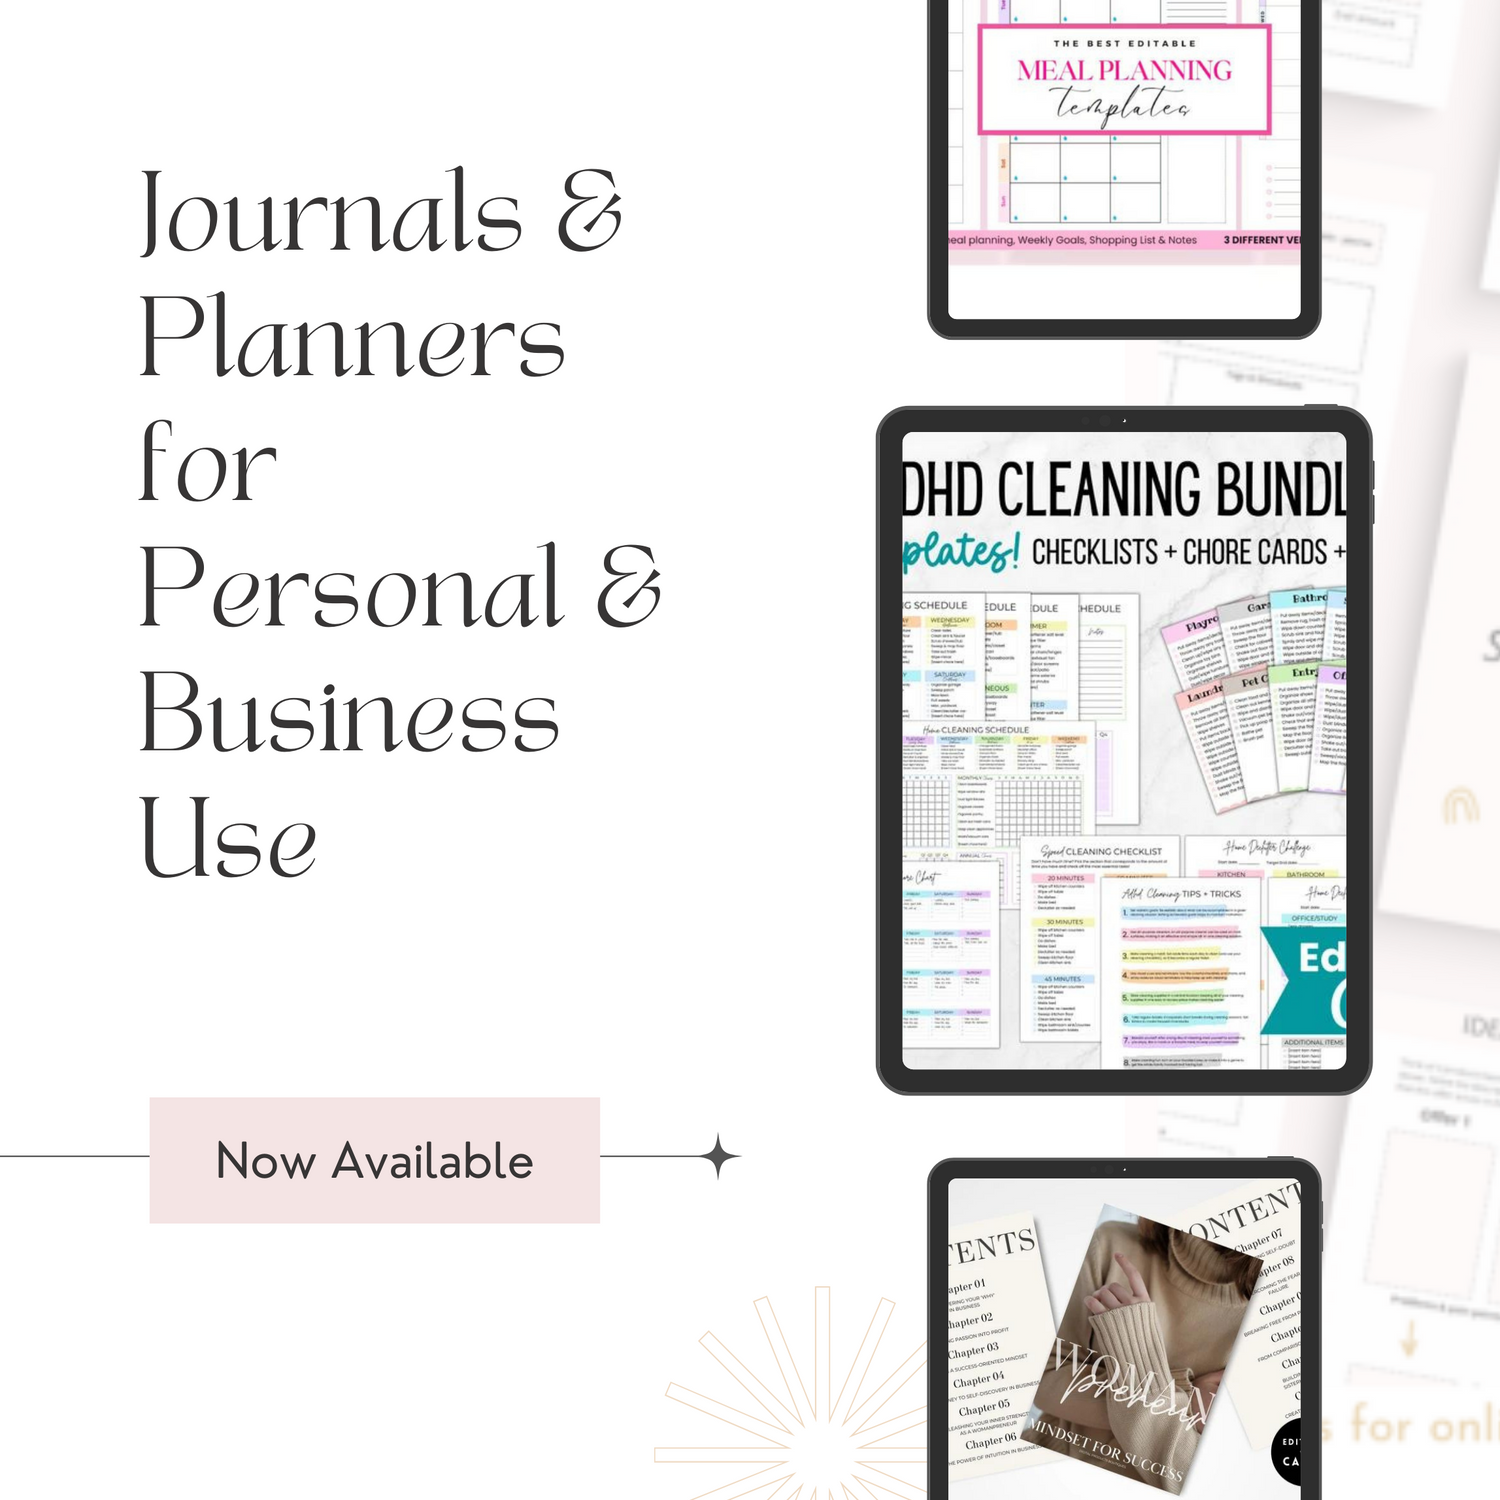 Journals & Planners